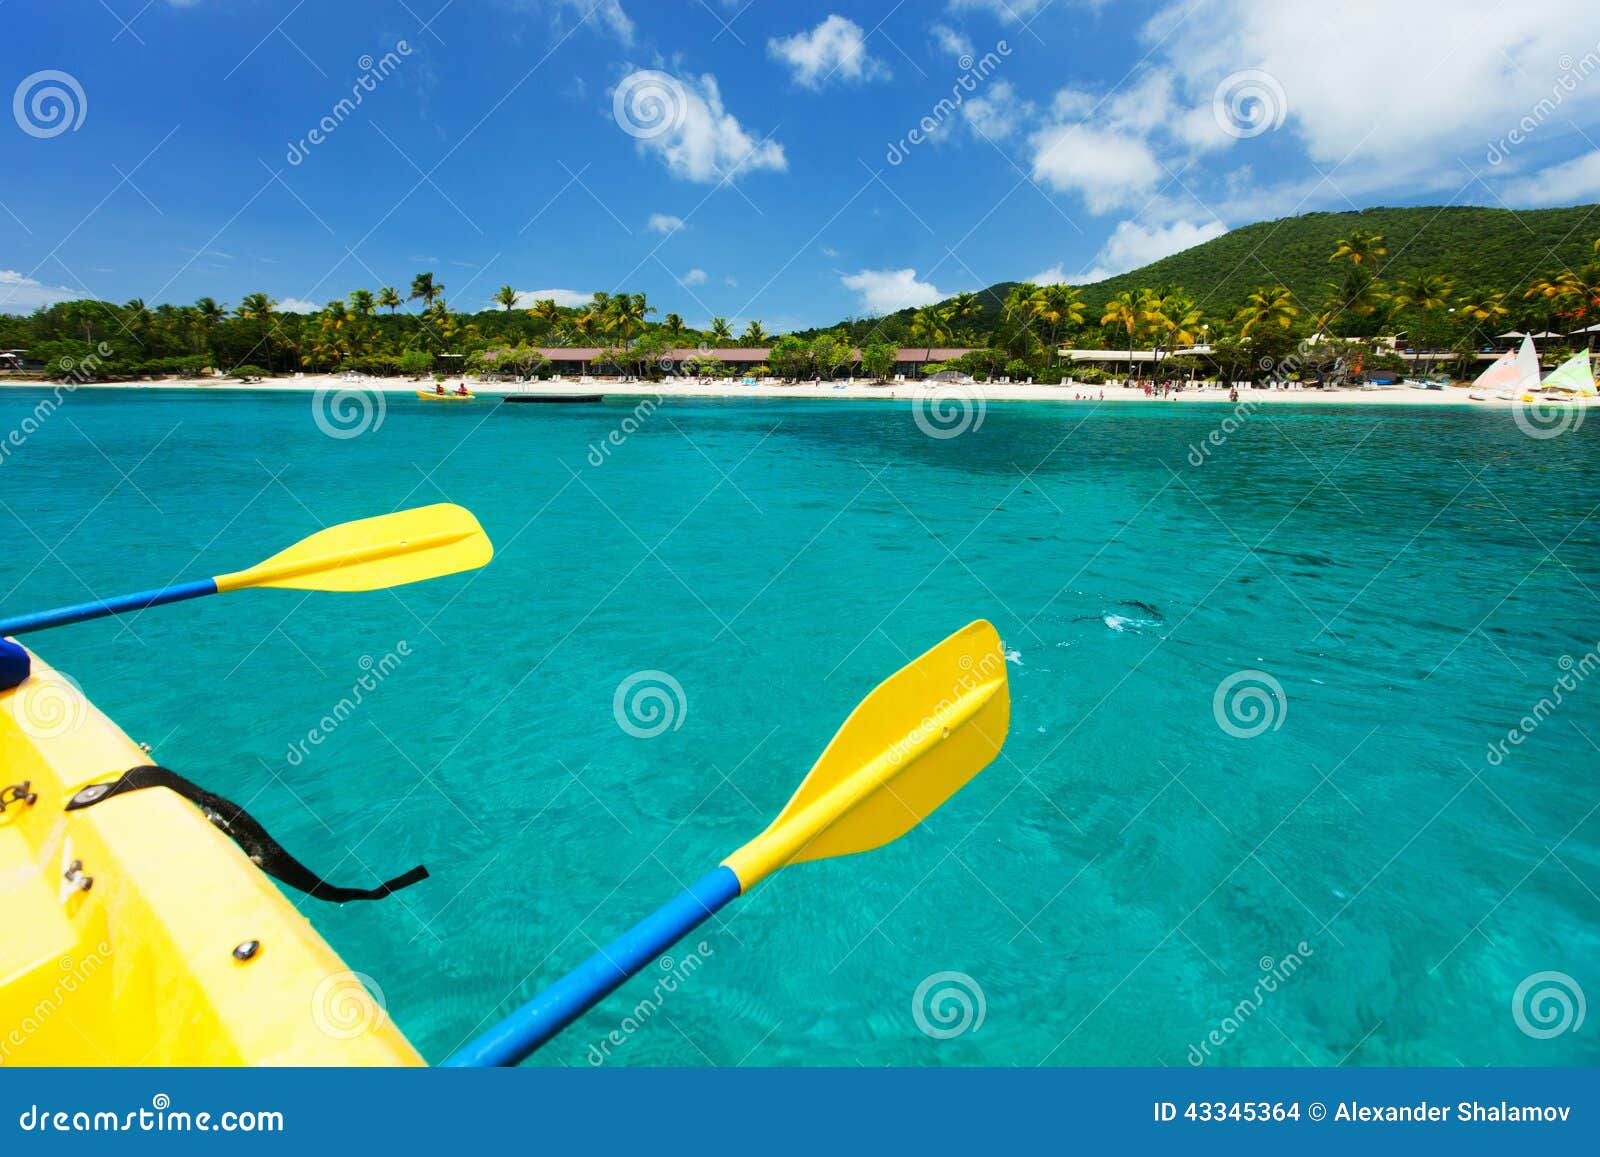 Kayaking At Tropical Ocean Stock Photo - Image: 43345364